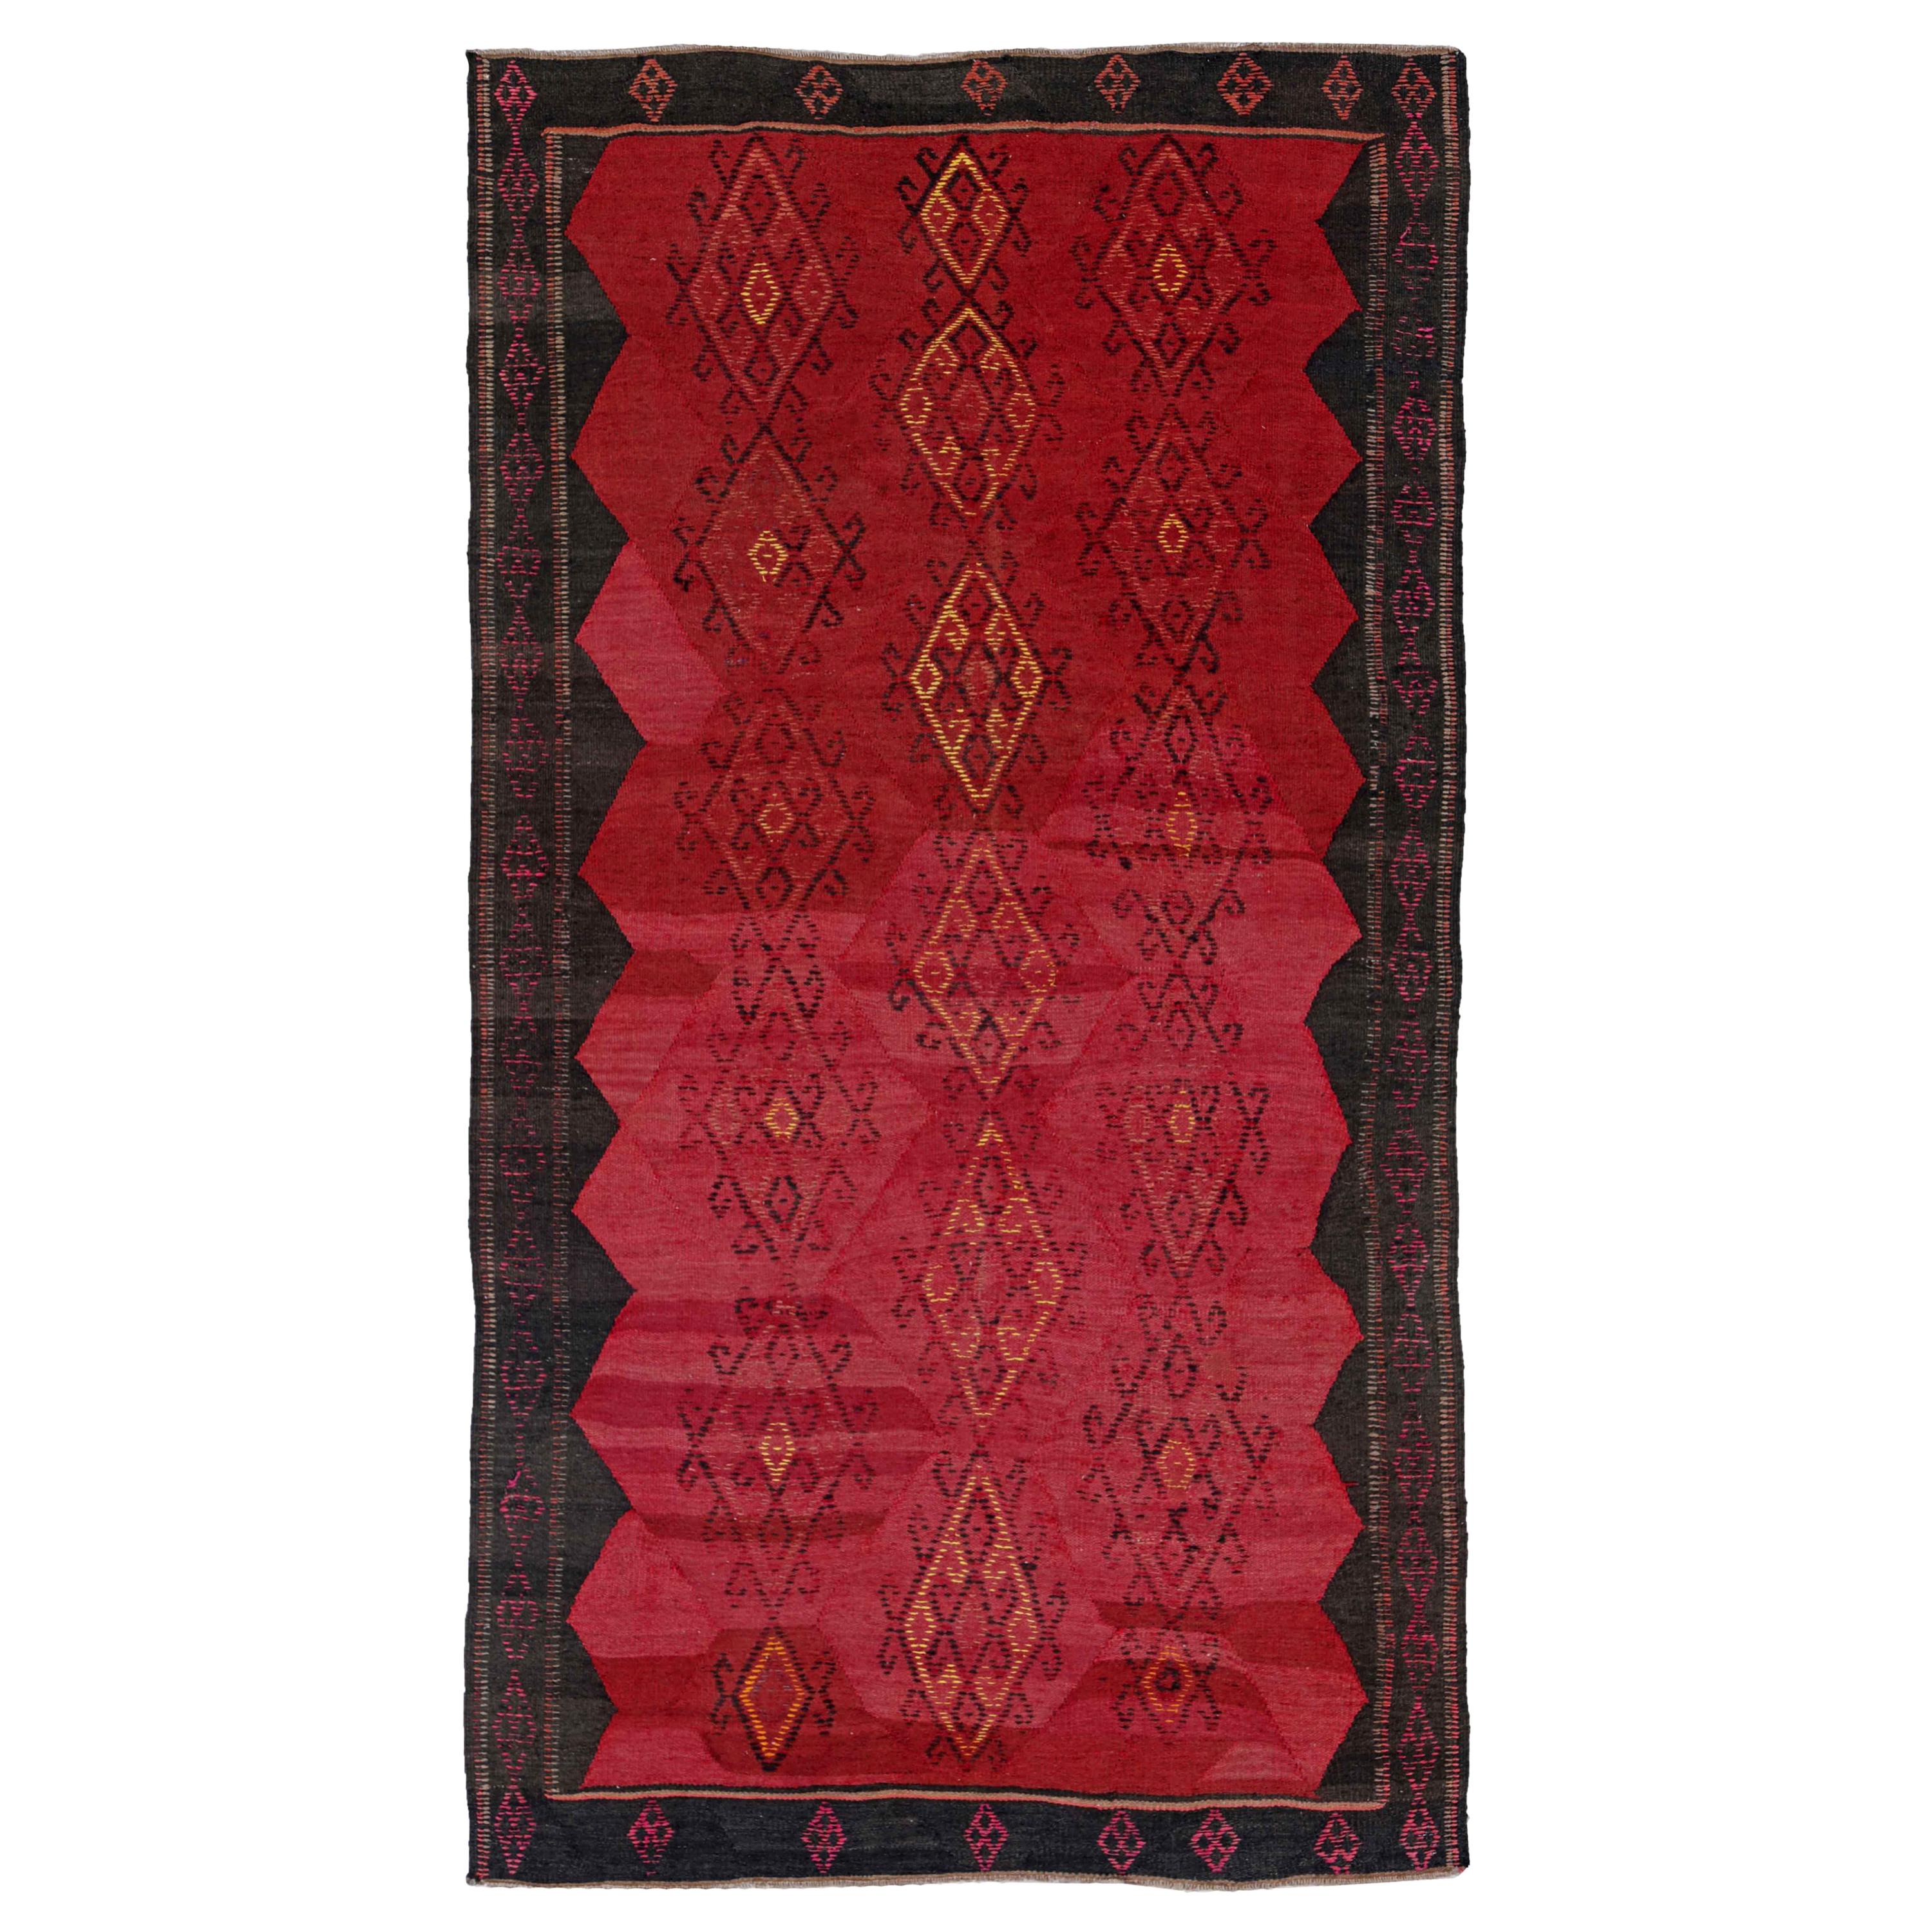 Antique Persian Area Rug Kilim Design For Sale